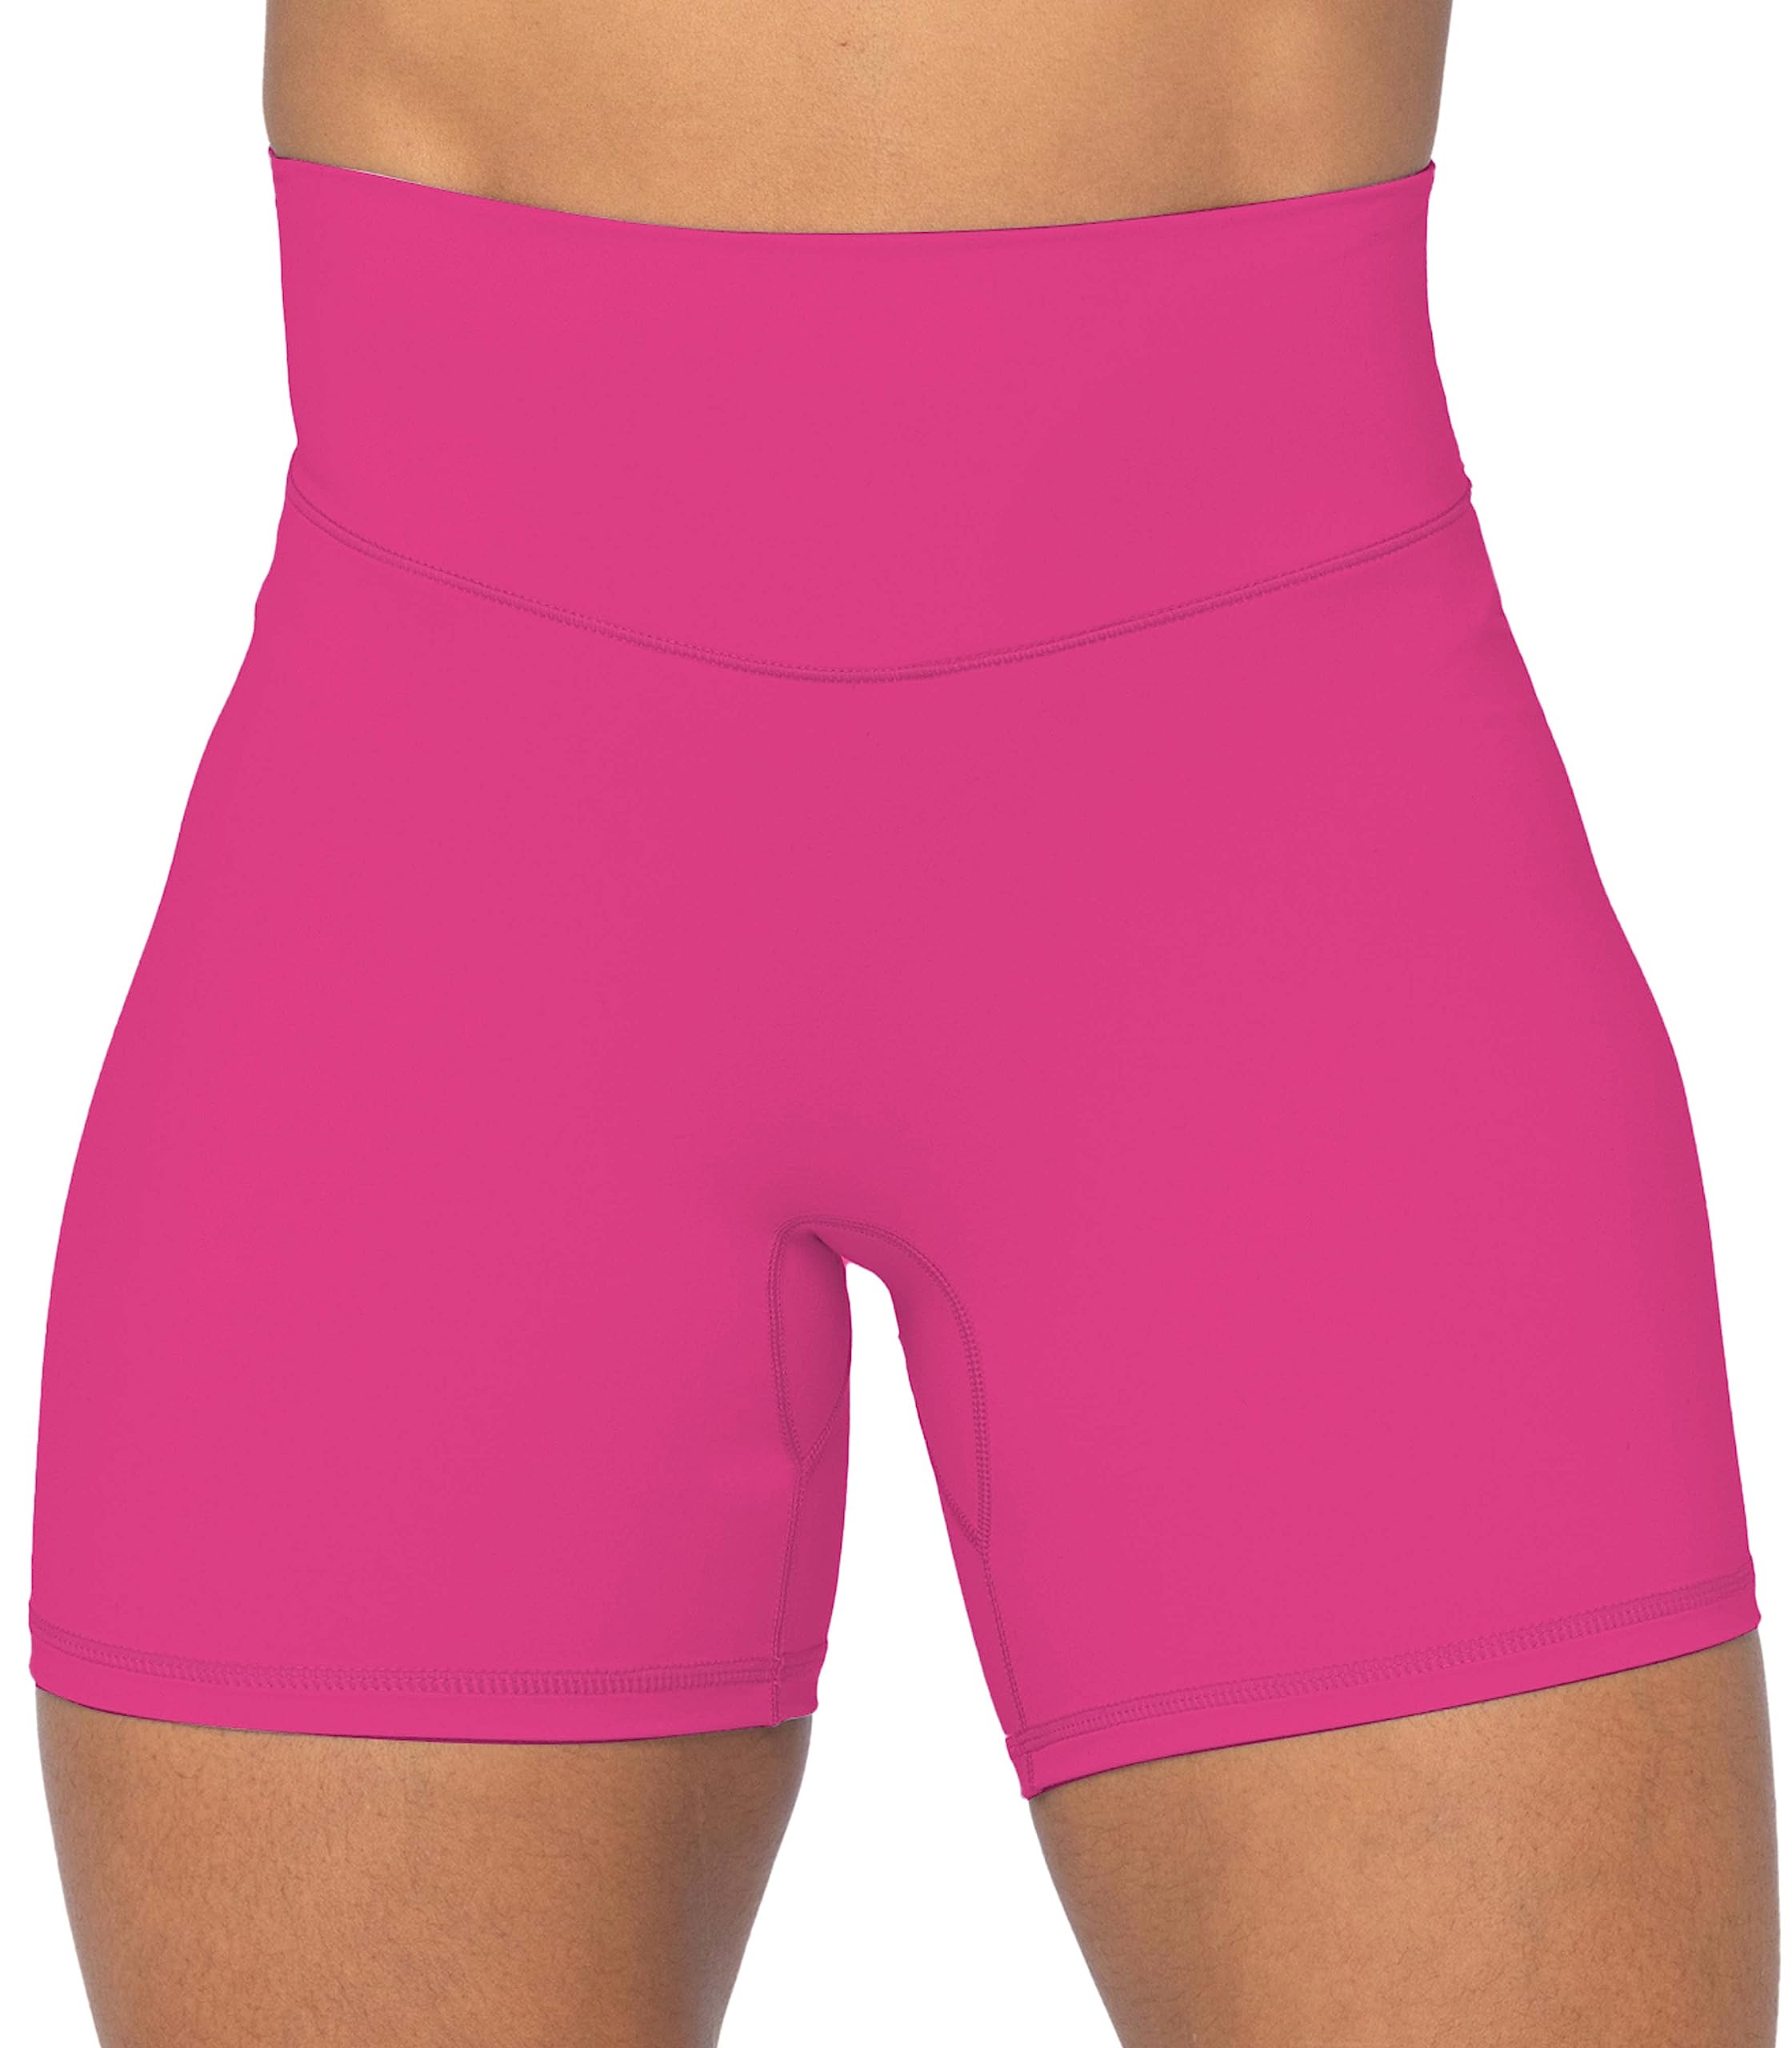 Buy Sunzel No Front Seam High Waist Biker Shorts for Women, Squat Proof  Yoga Workout Gym Bike Shorts